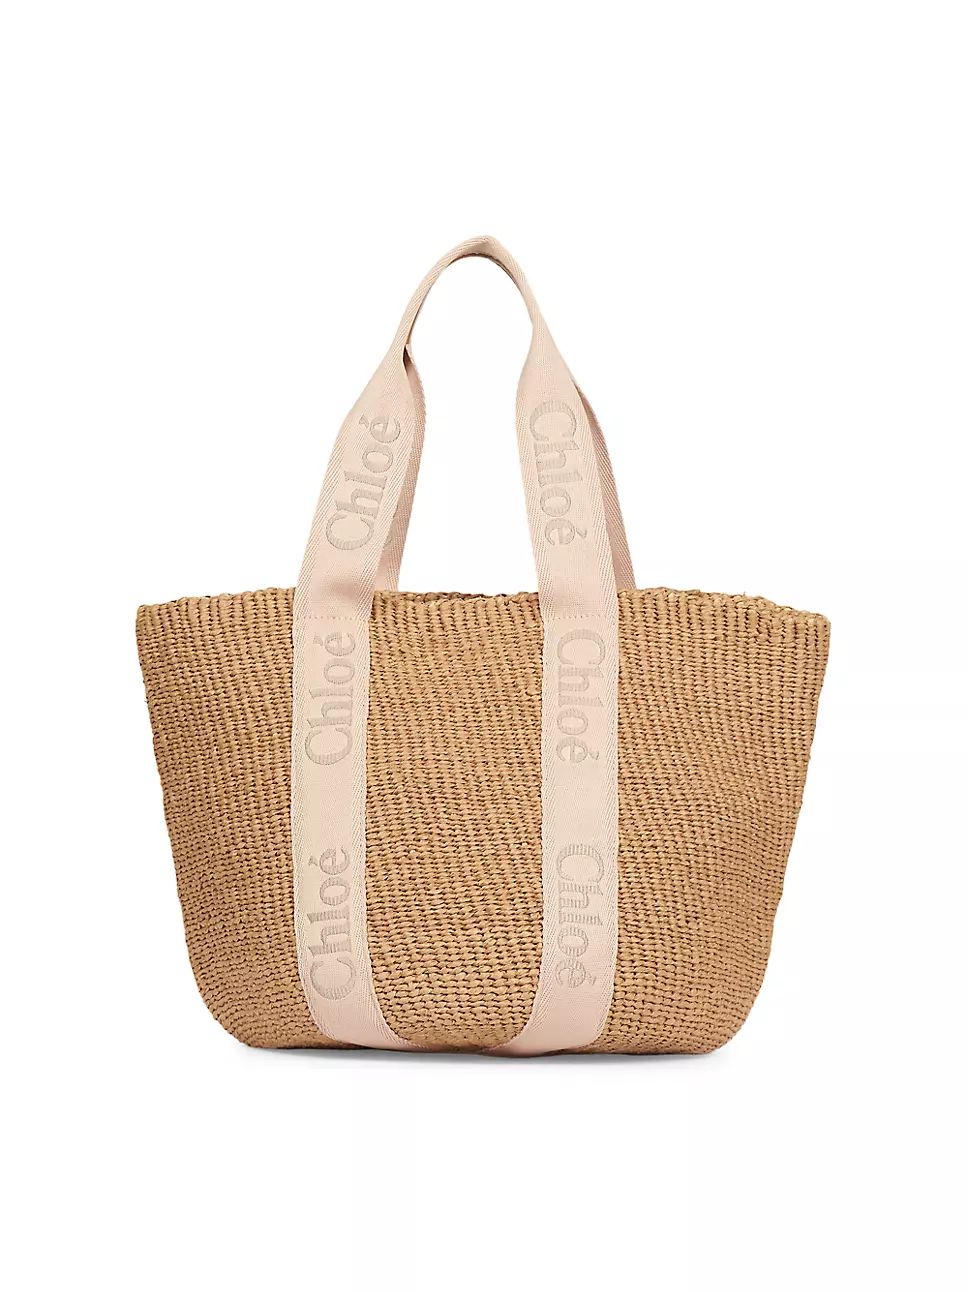 Chloé Large Woody Basket Tote Bag | Saks Fifth Avenue